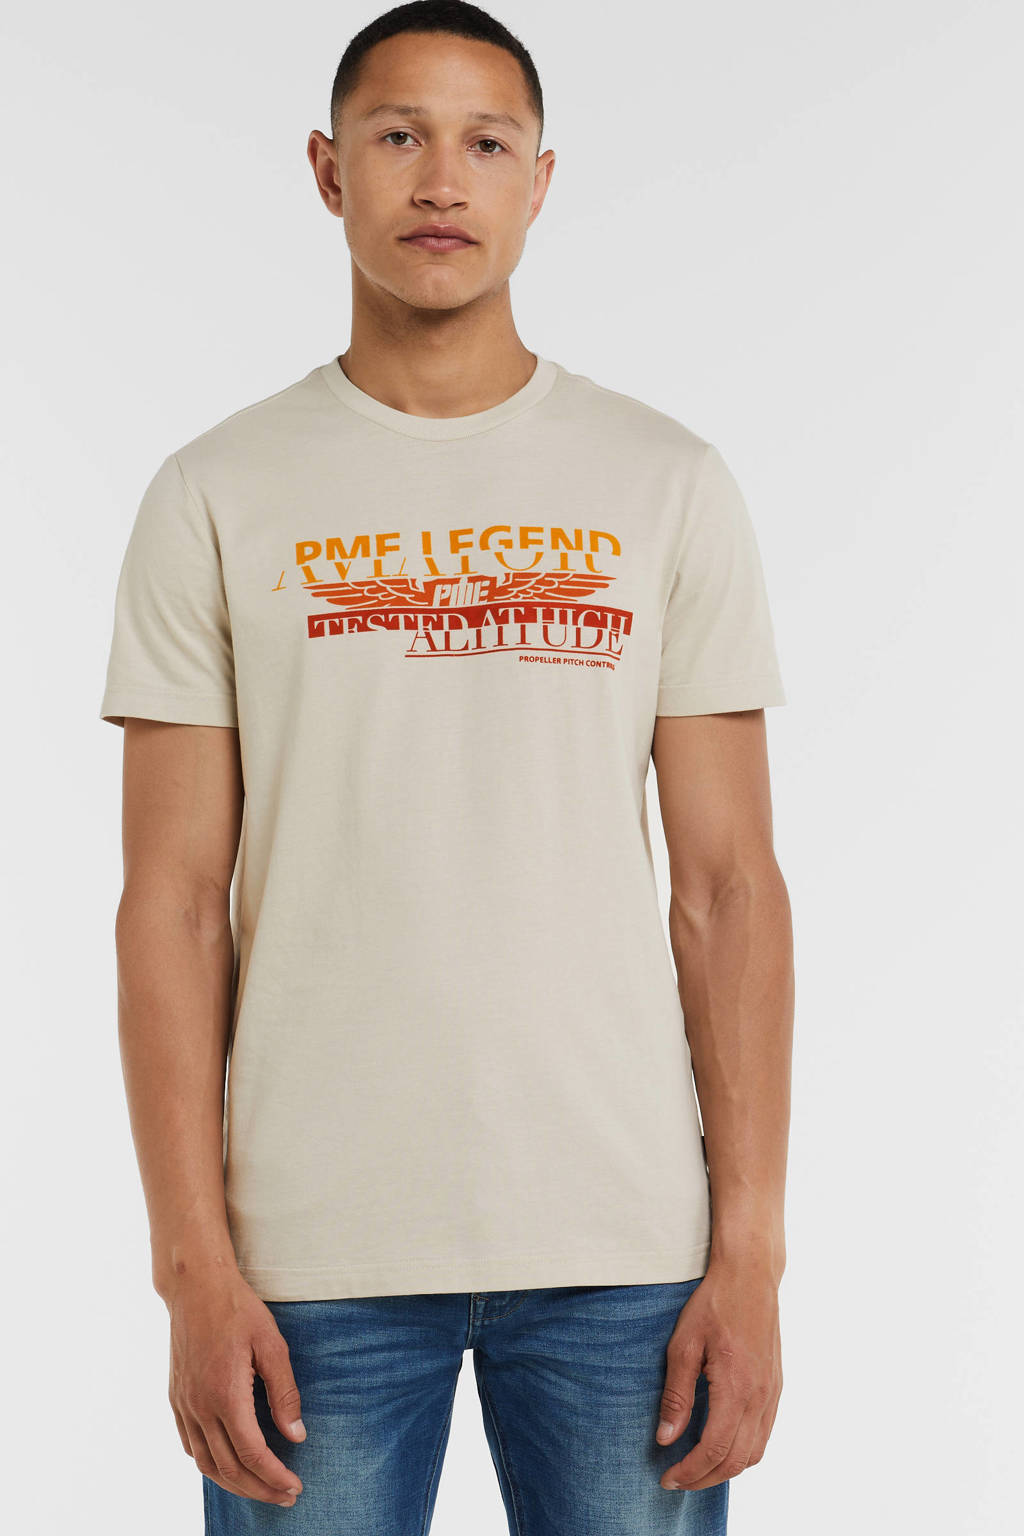 Katholiek Visser cruise PME Legend T-shirt met logo 7074 beige | wehkamp